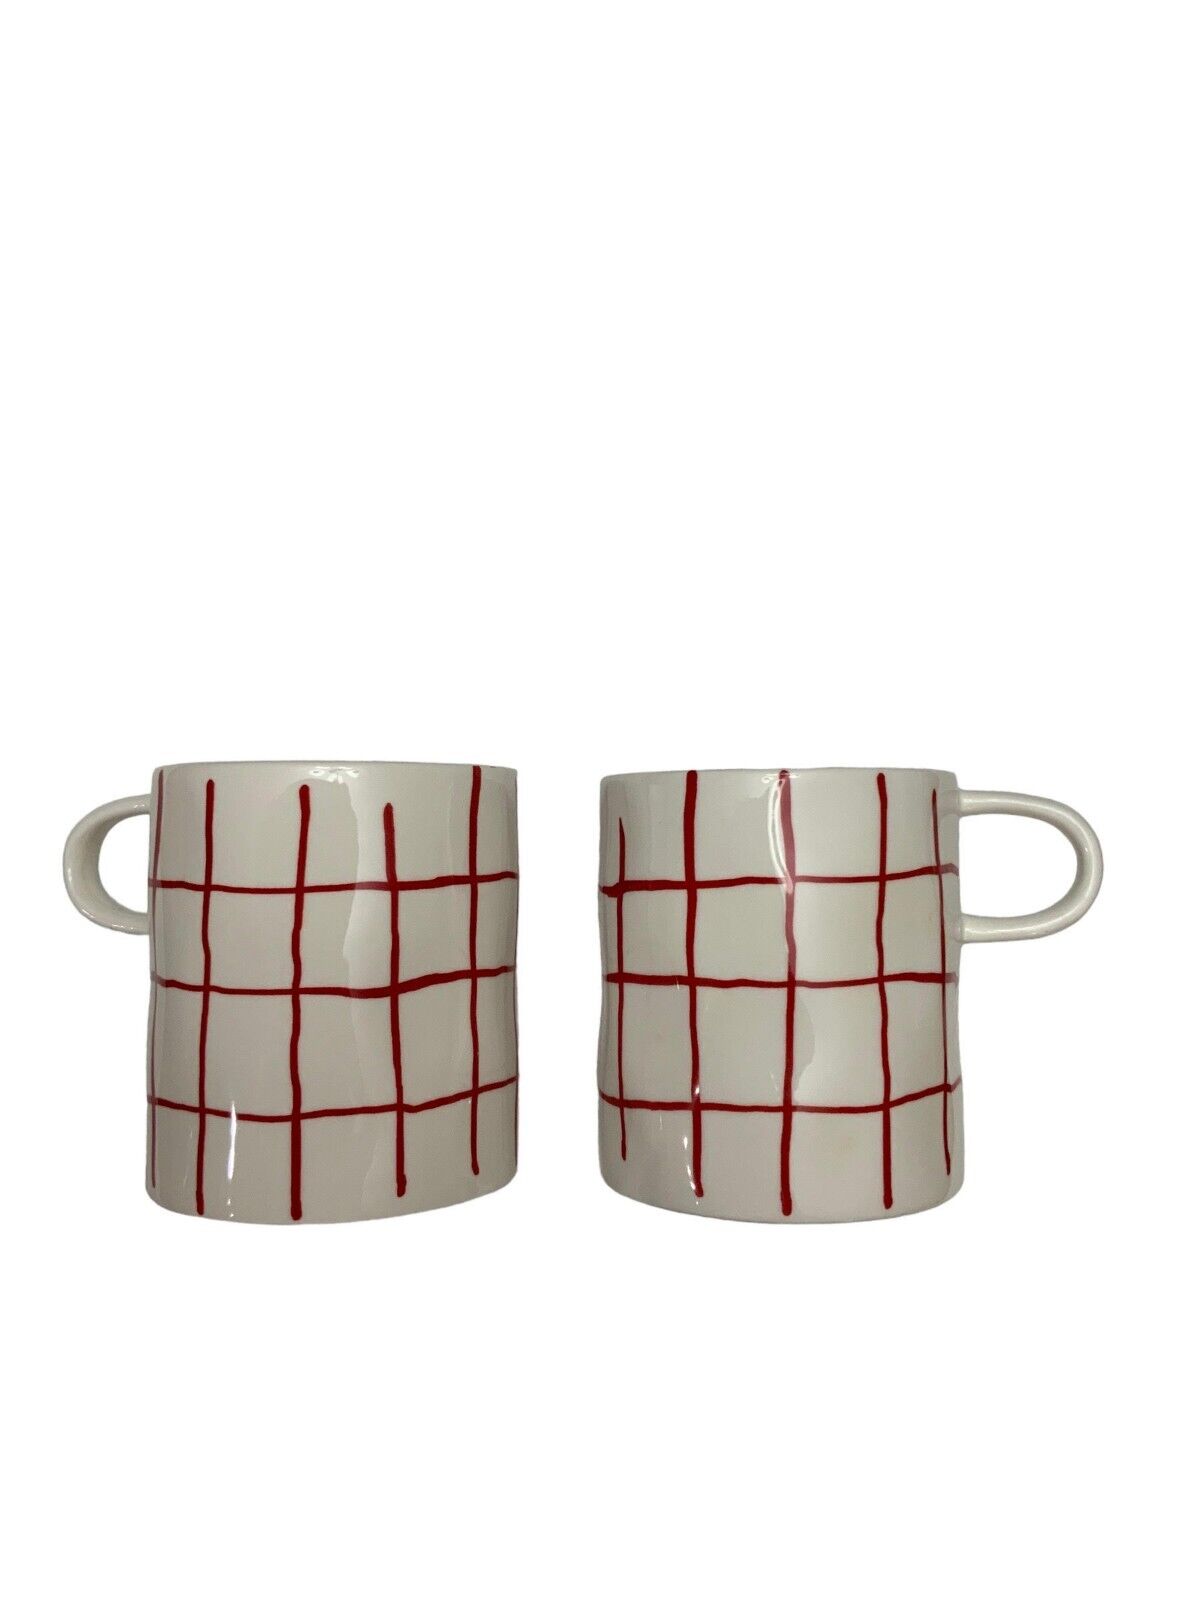 Two Coffee Mugs 23 oz White Mug Red Stripes Porcelain China Huge Wrap Hands (B1)